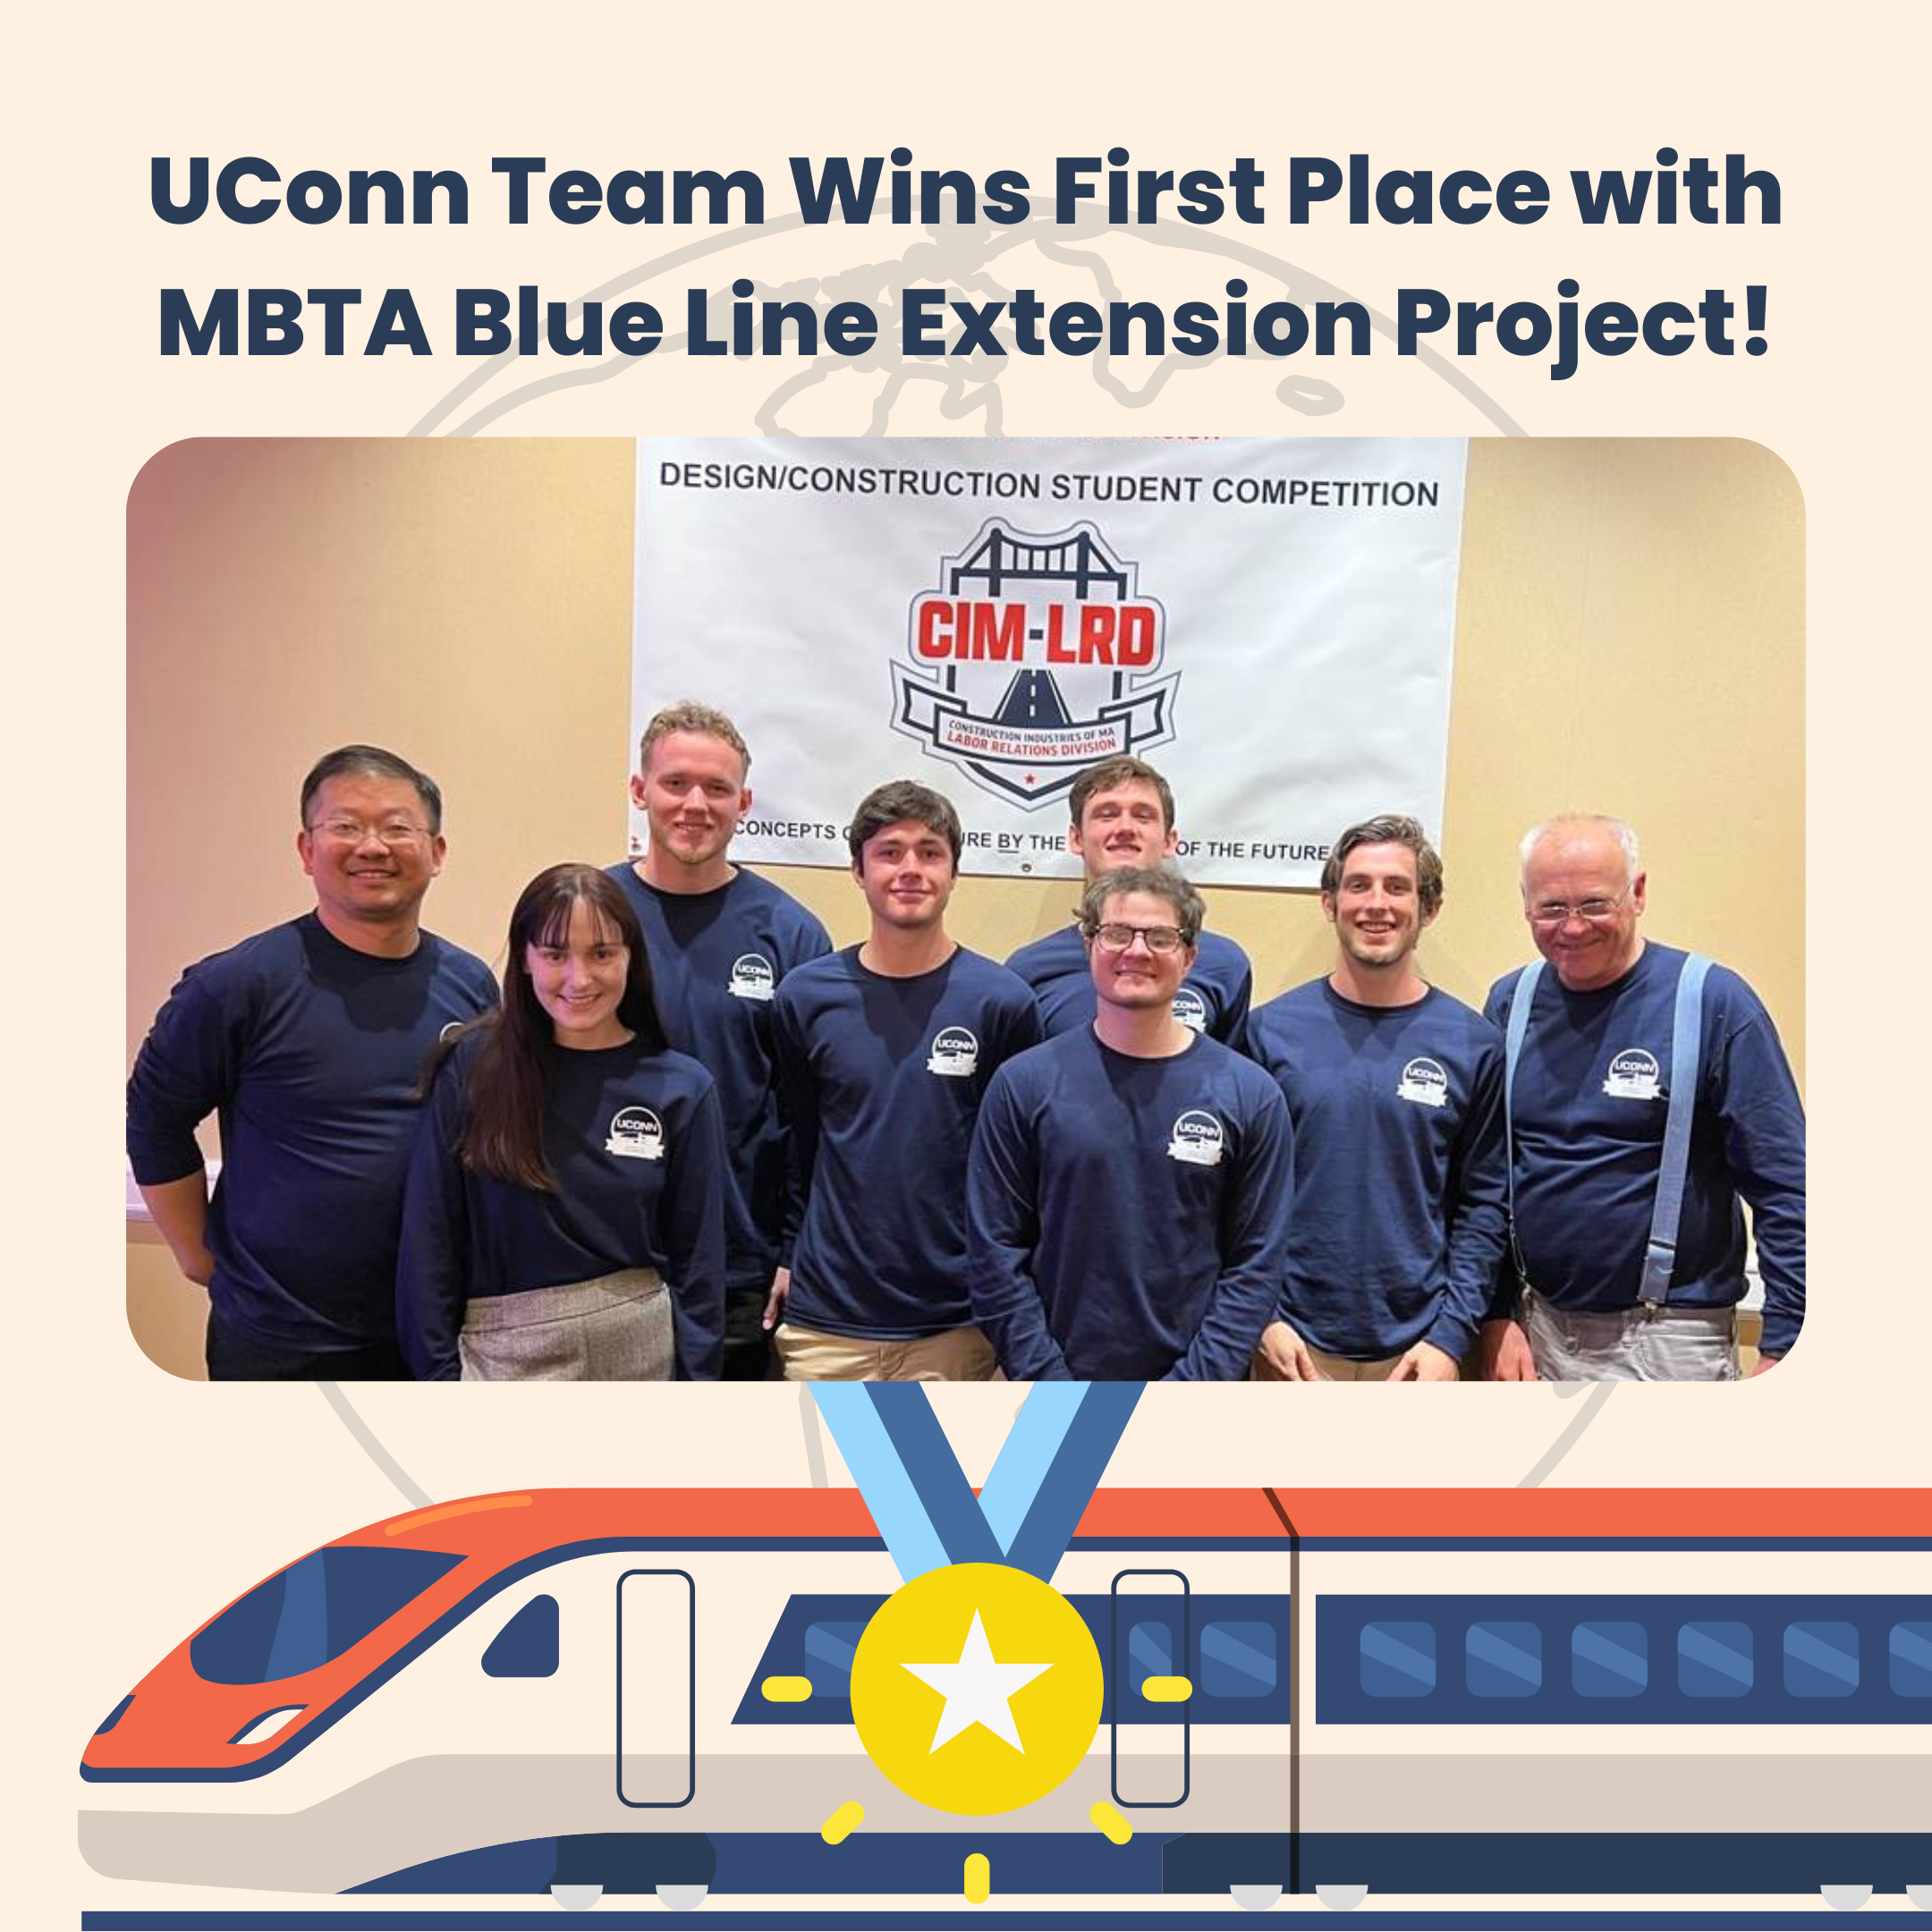 
https://cee.engr.uconn.edu/wp-content/uploads/2023/04/MBTA-Blue-Line-Extension-Project-Victory.png
